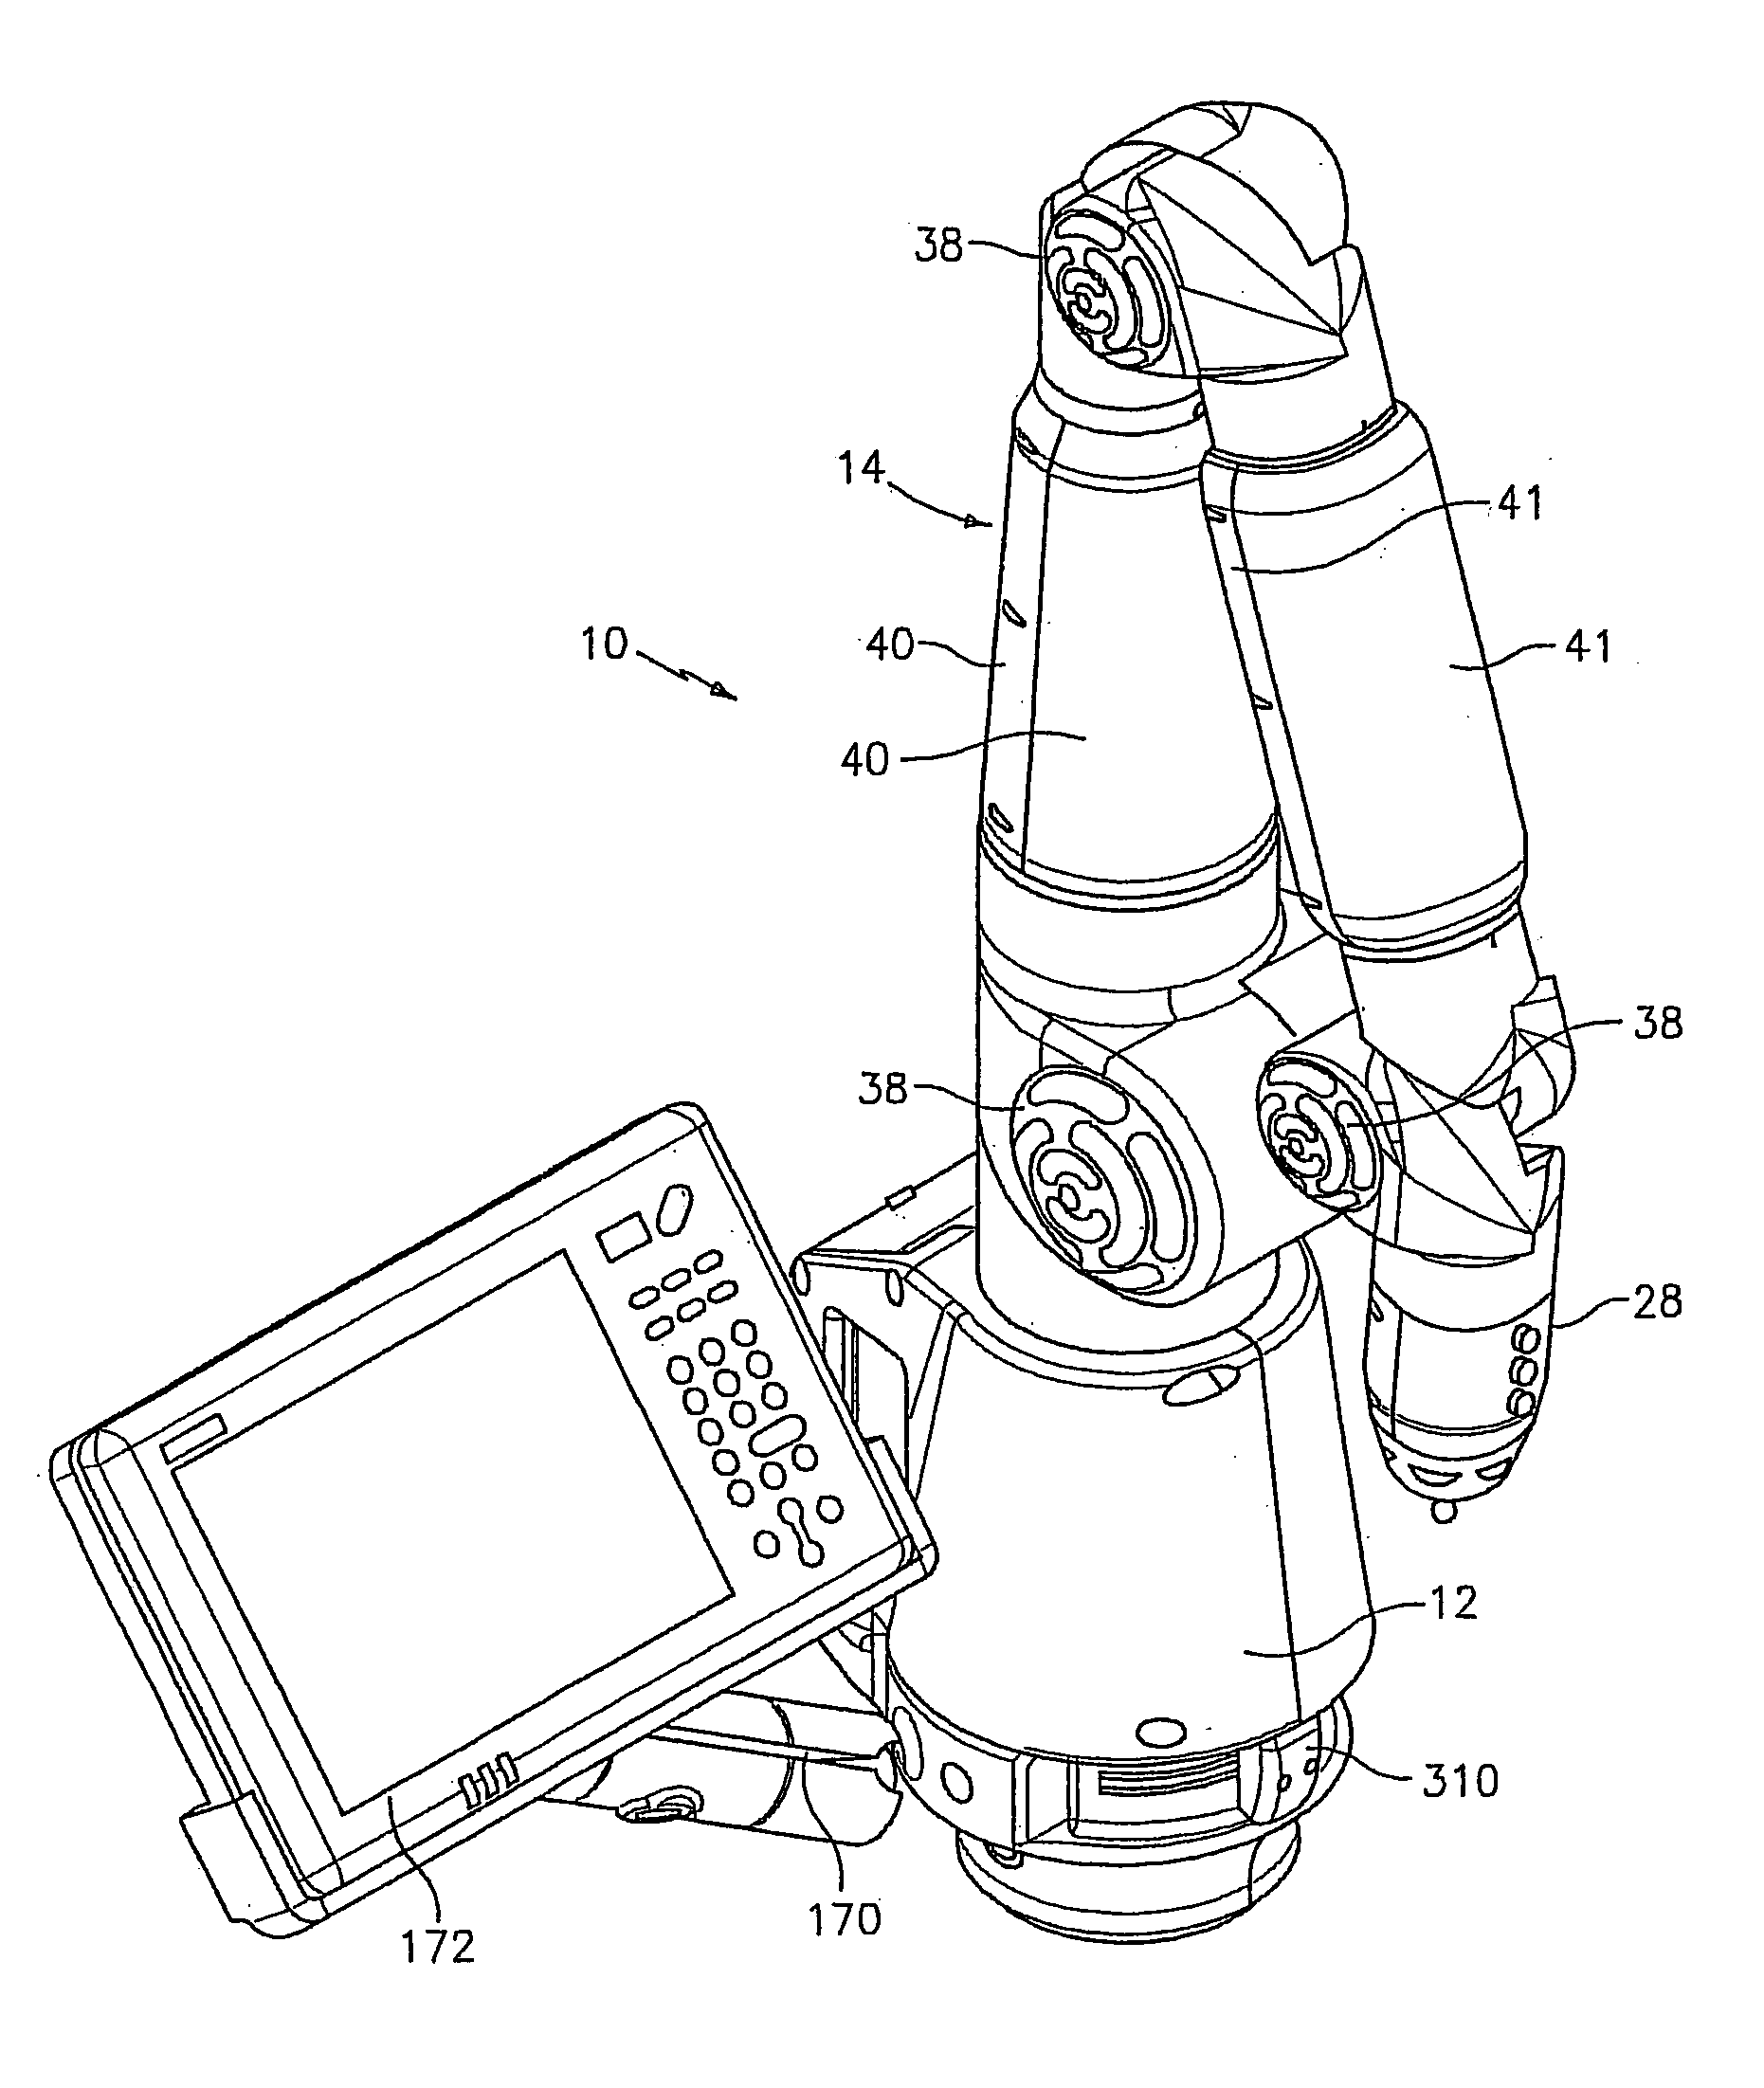 Apparatus for providing sensory feedback to the operator of a portable measurement machine